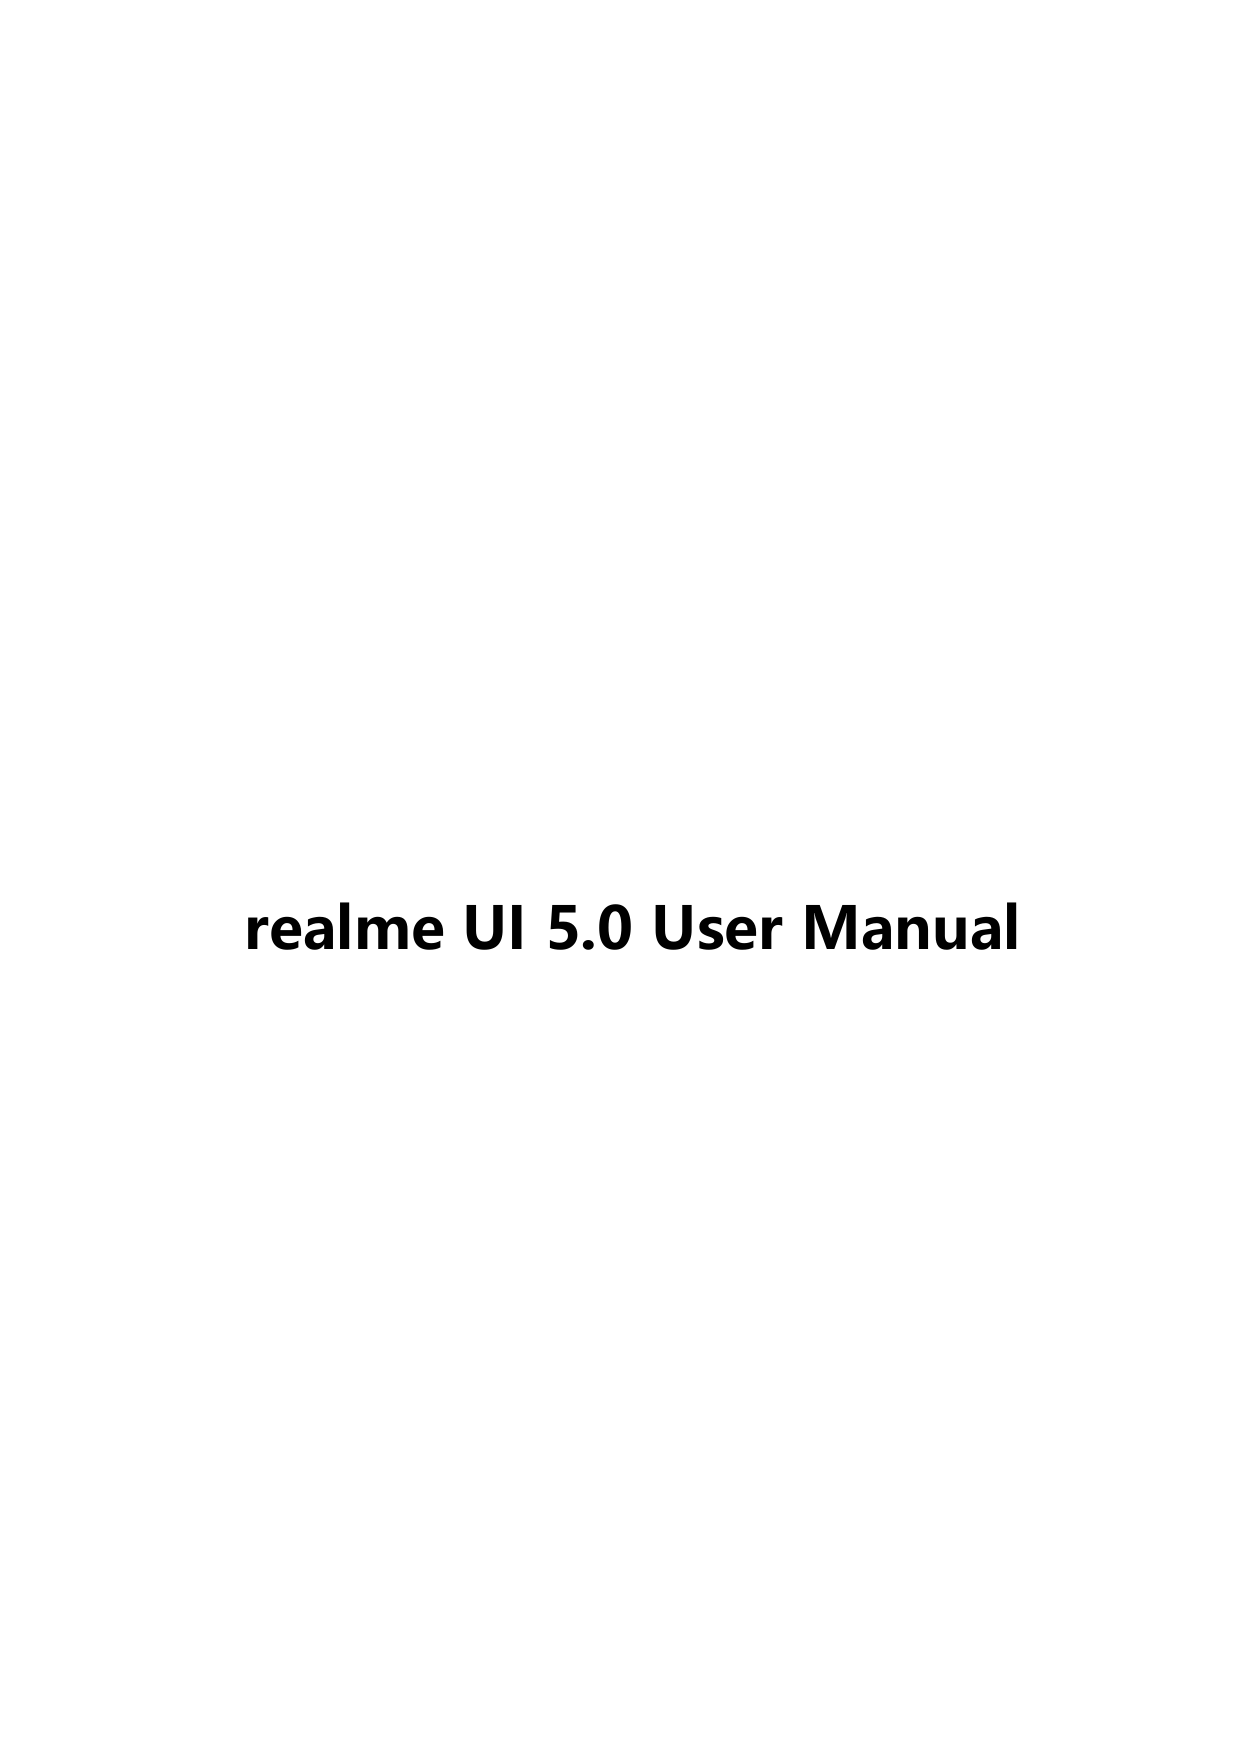 realme UI 5.0 User Manual